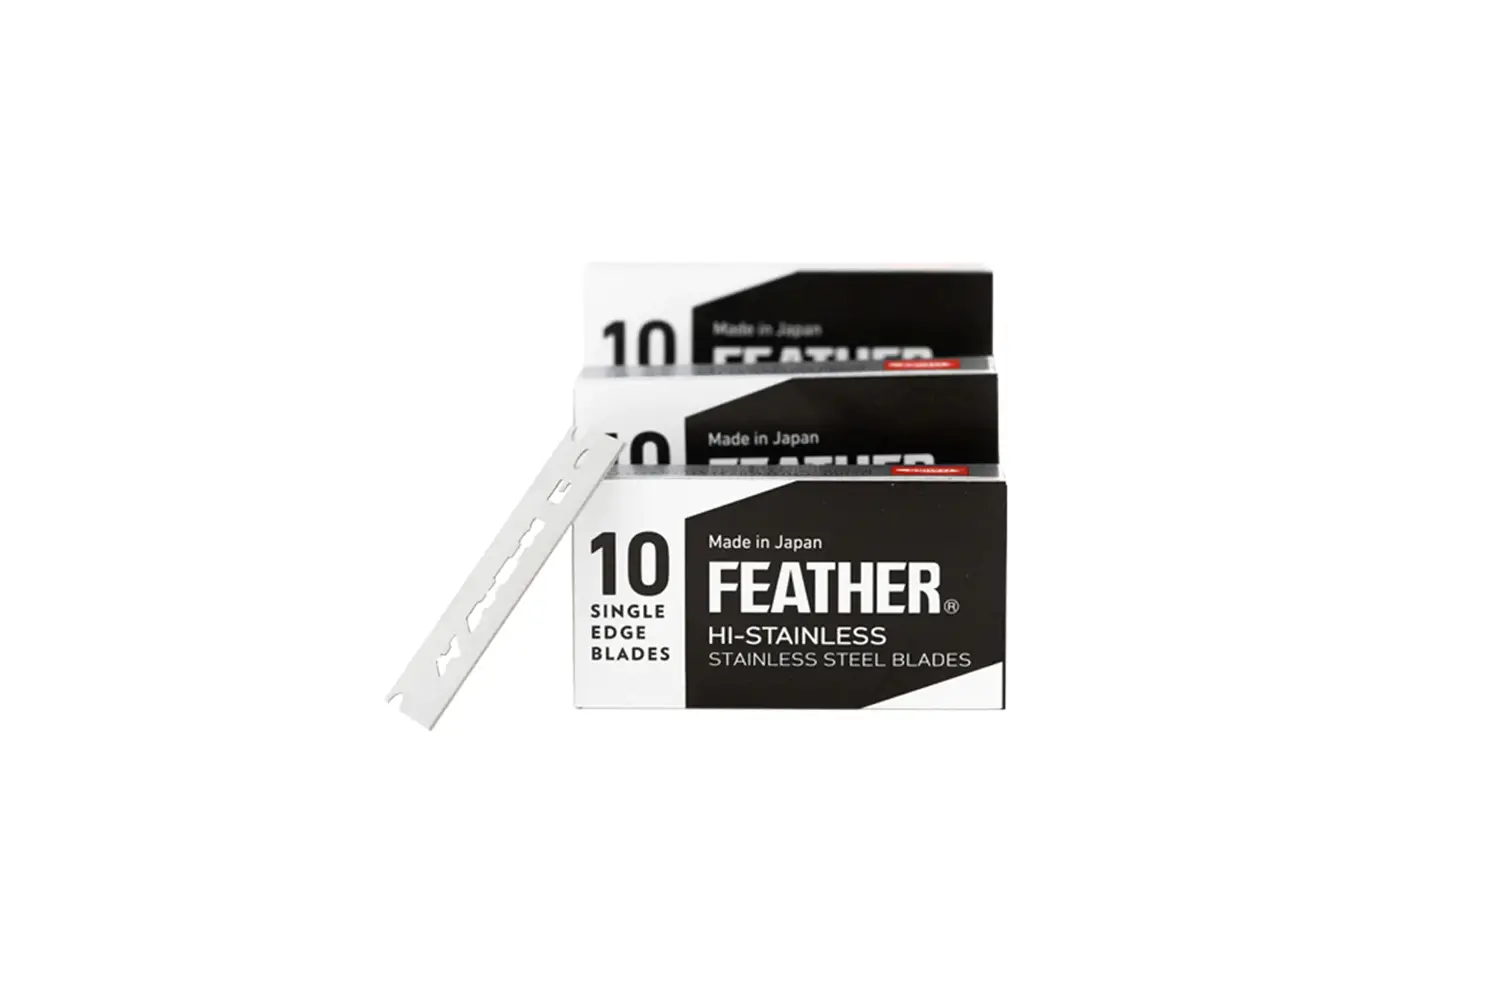 feather fhs 10 blades